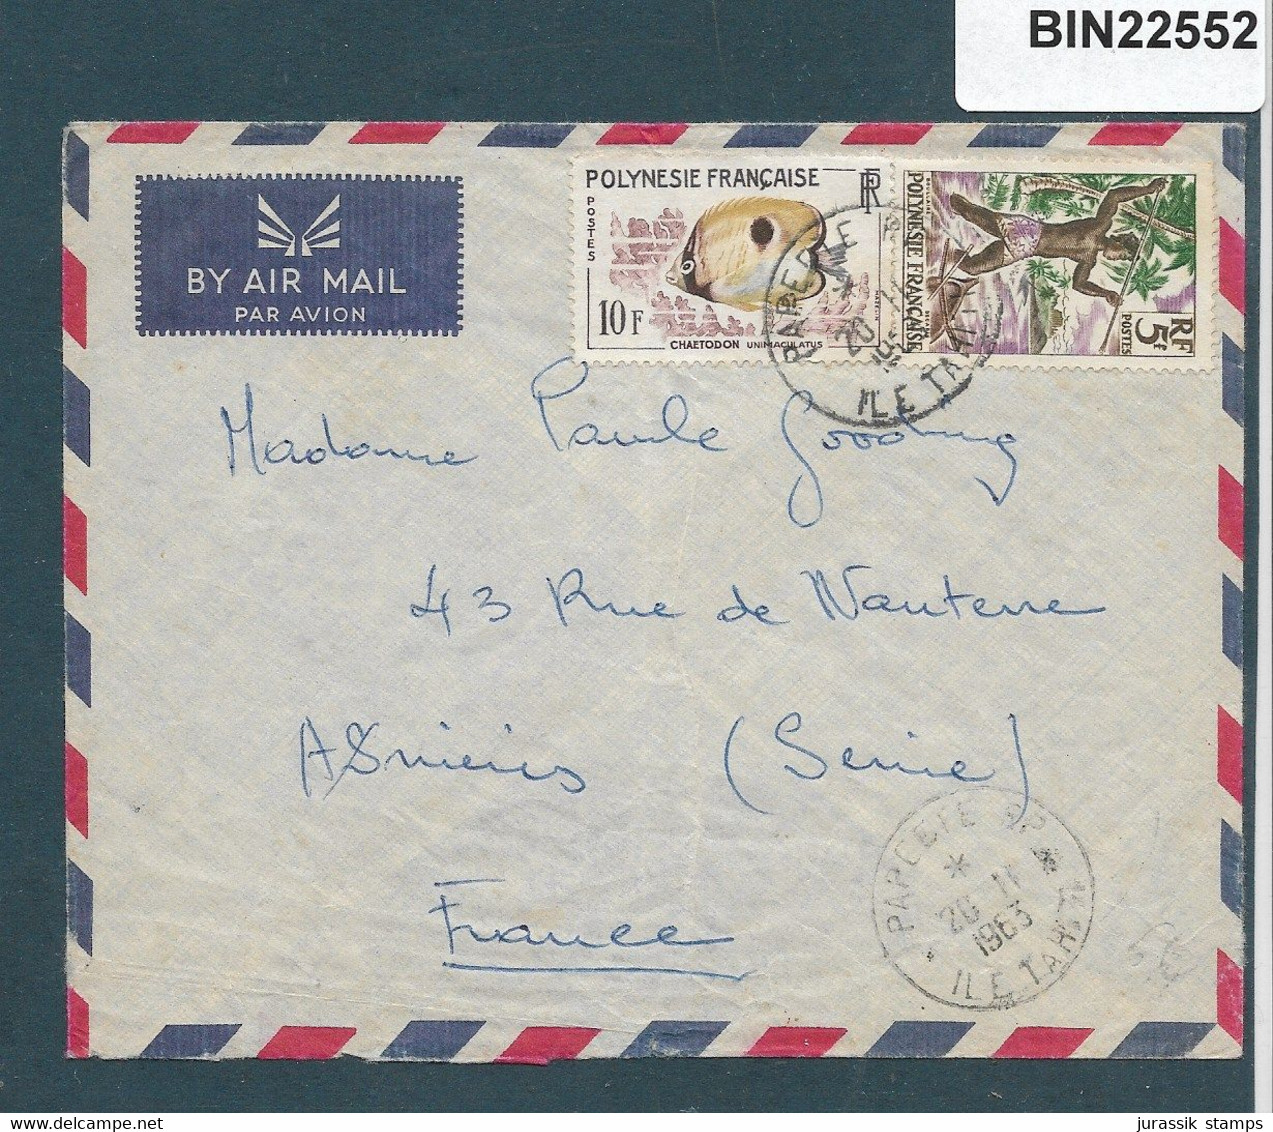 TAHITI   - 1963 COVER PAPEETE TO FRANCE  - 22552 - Briefe U. Dokumente